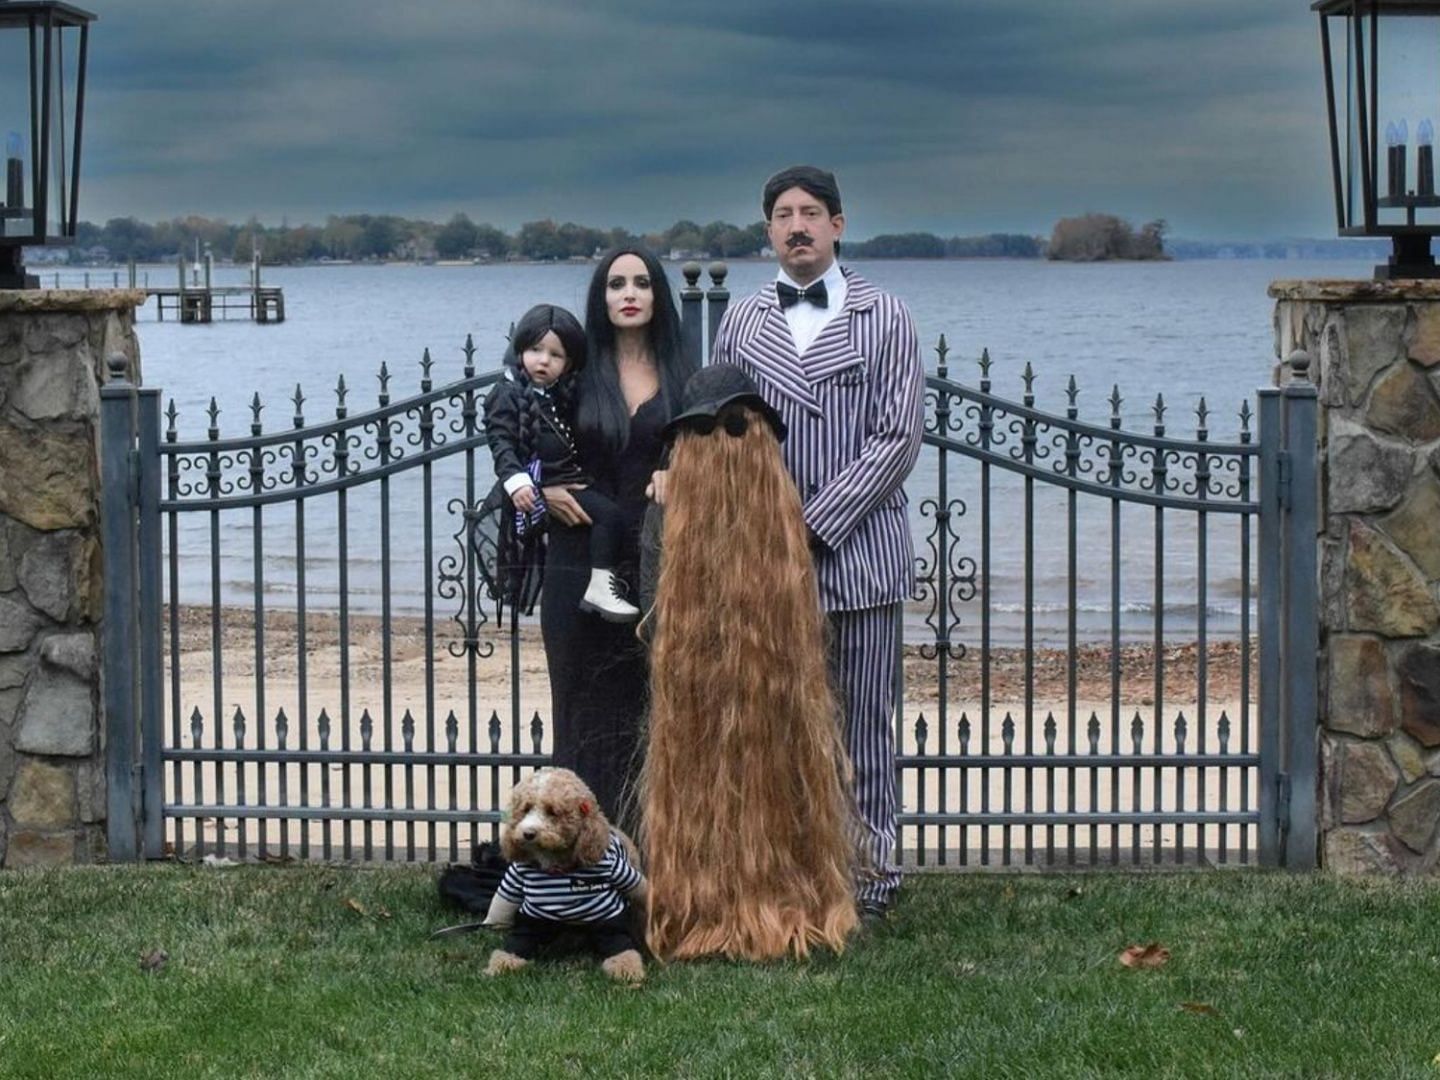 Kyle and Samantha Busch family celebrating Halloween (Image from Instagram:  @samanthabusch)